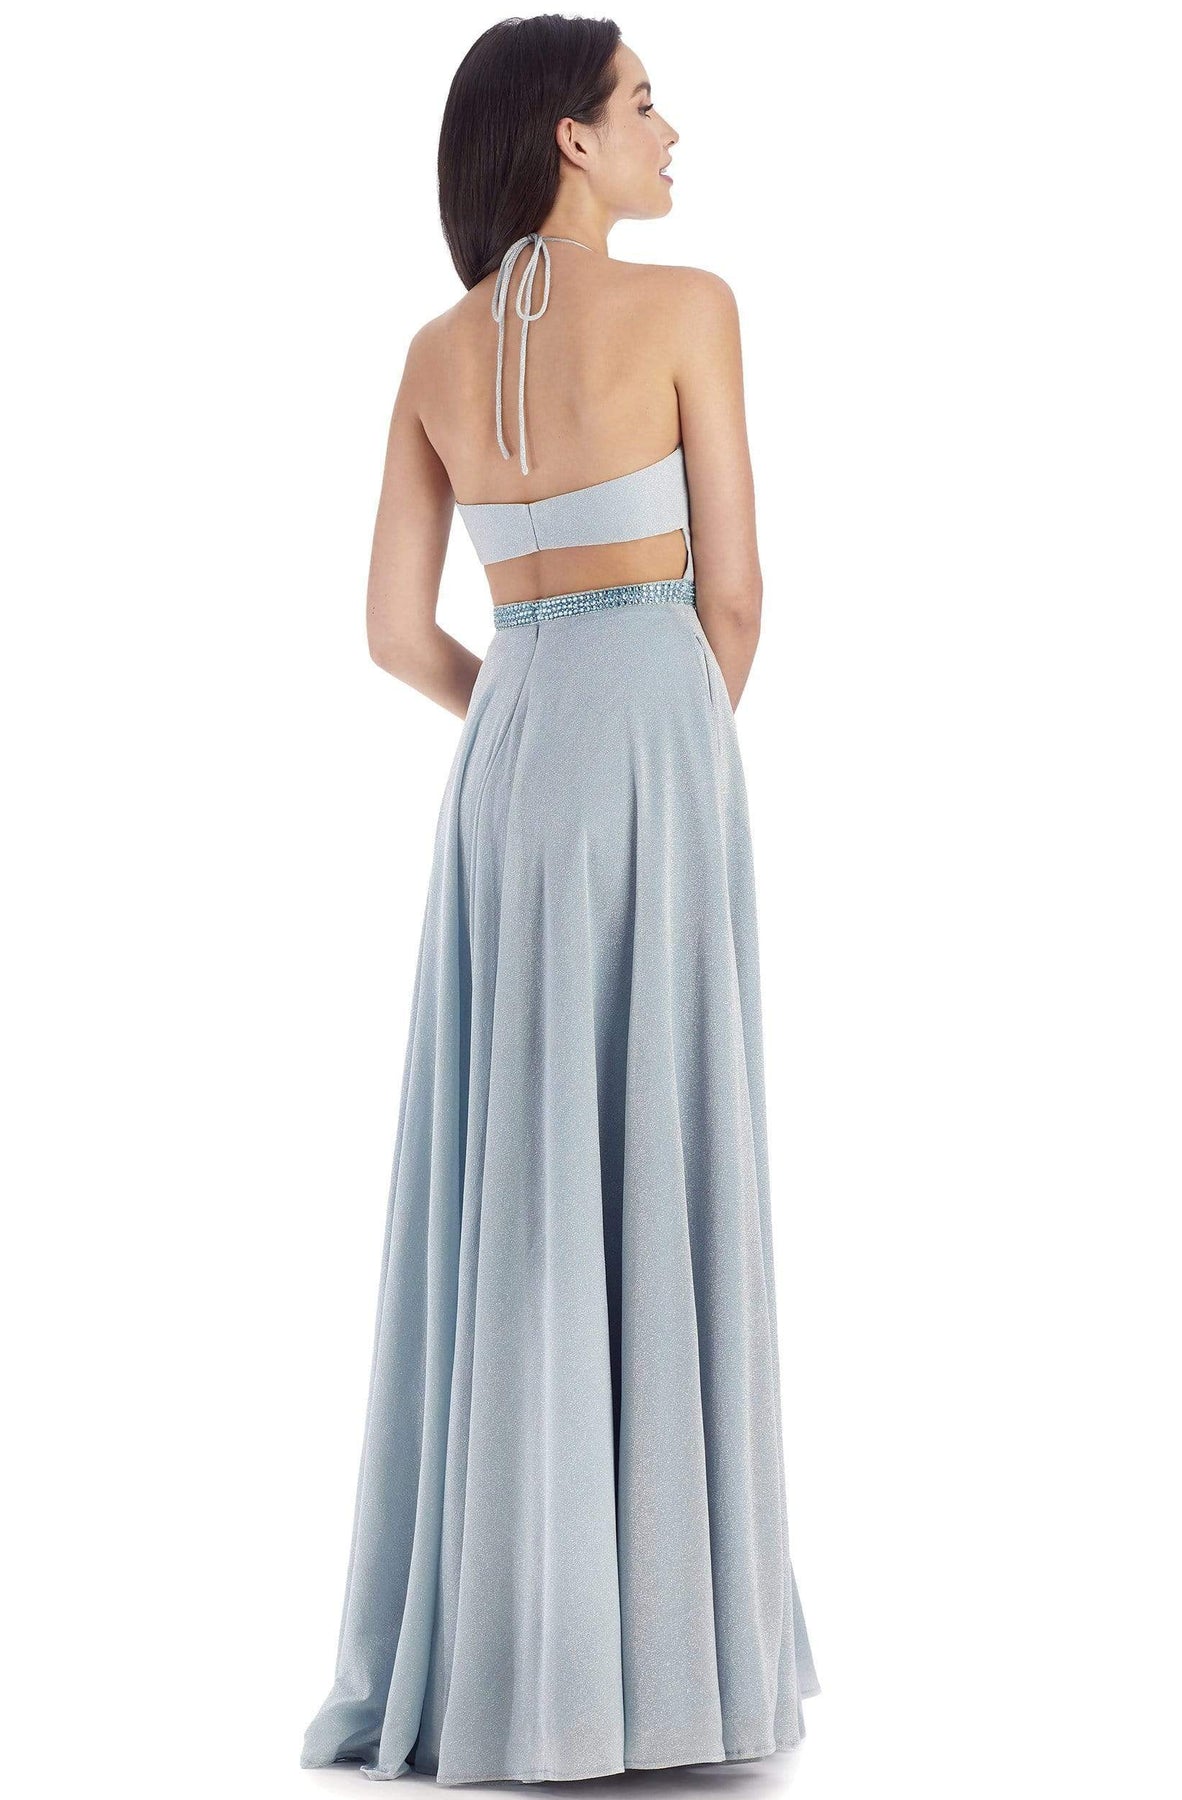 Clarisse - 8051 Halter Neck Beaded A-line Dress Evening Dresses 0 / Aqua